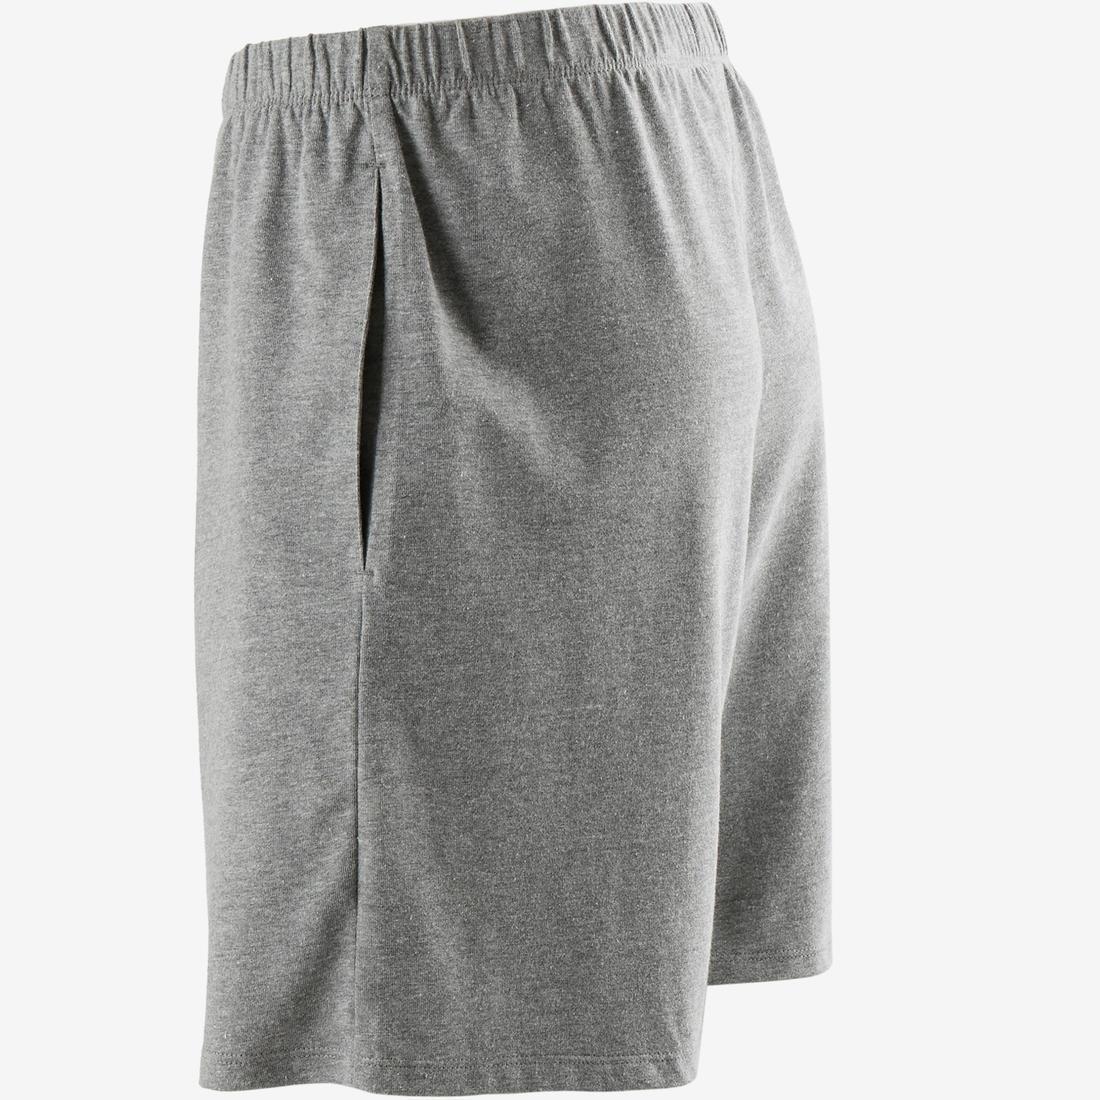 DOMYOS - Fitness Short Cotton Shorts, Pewter